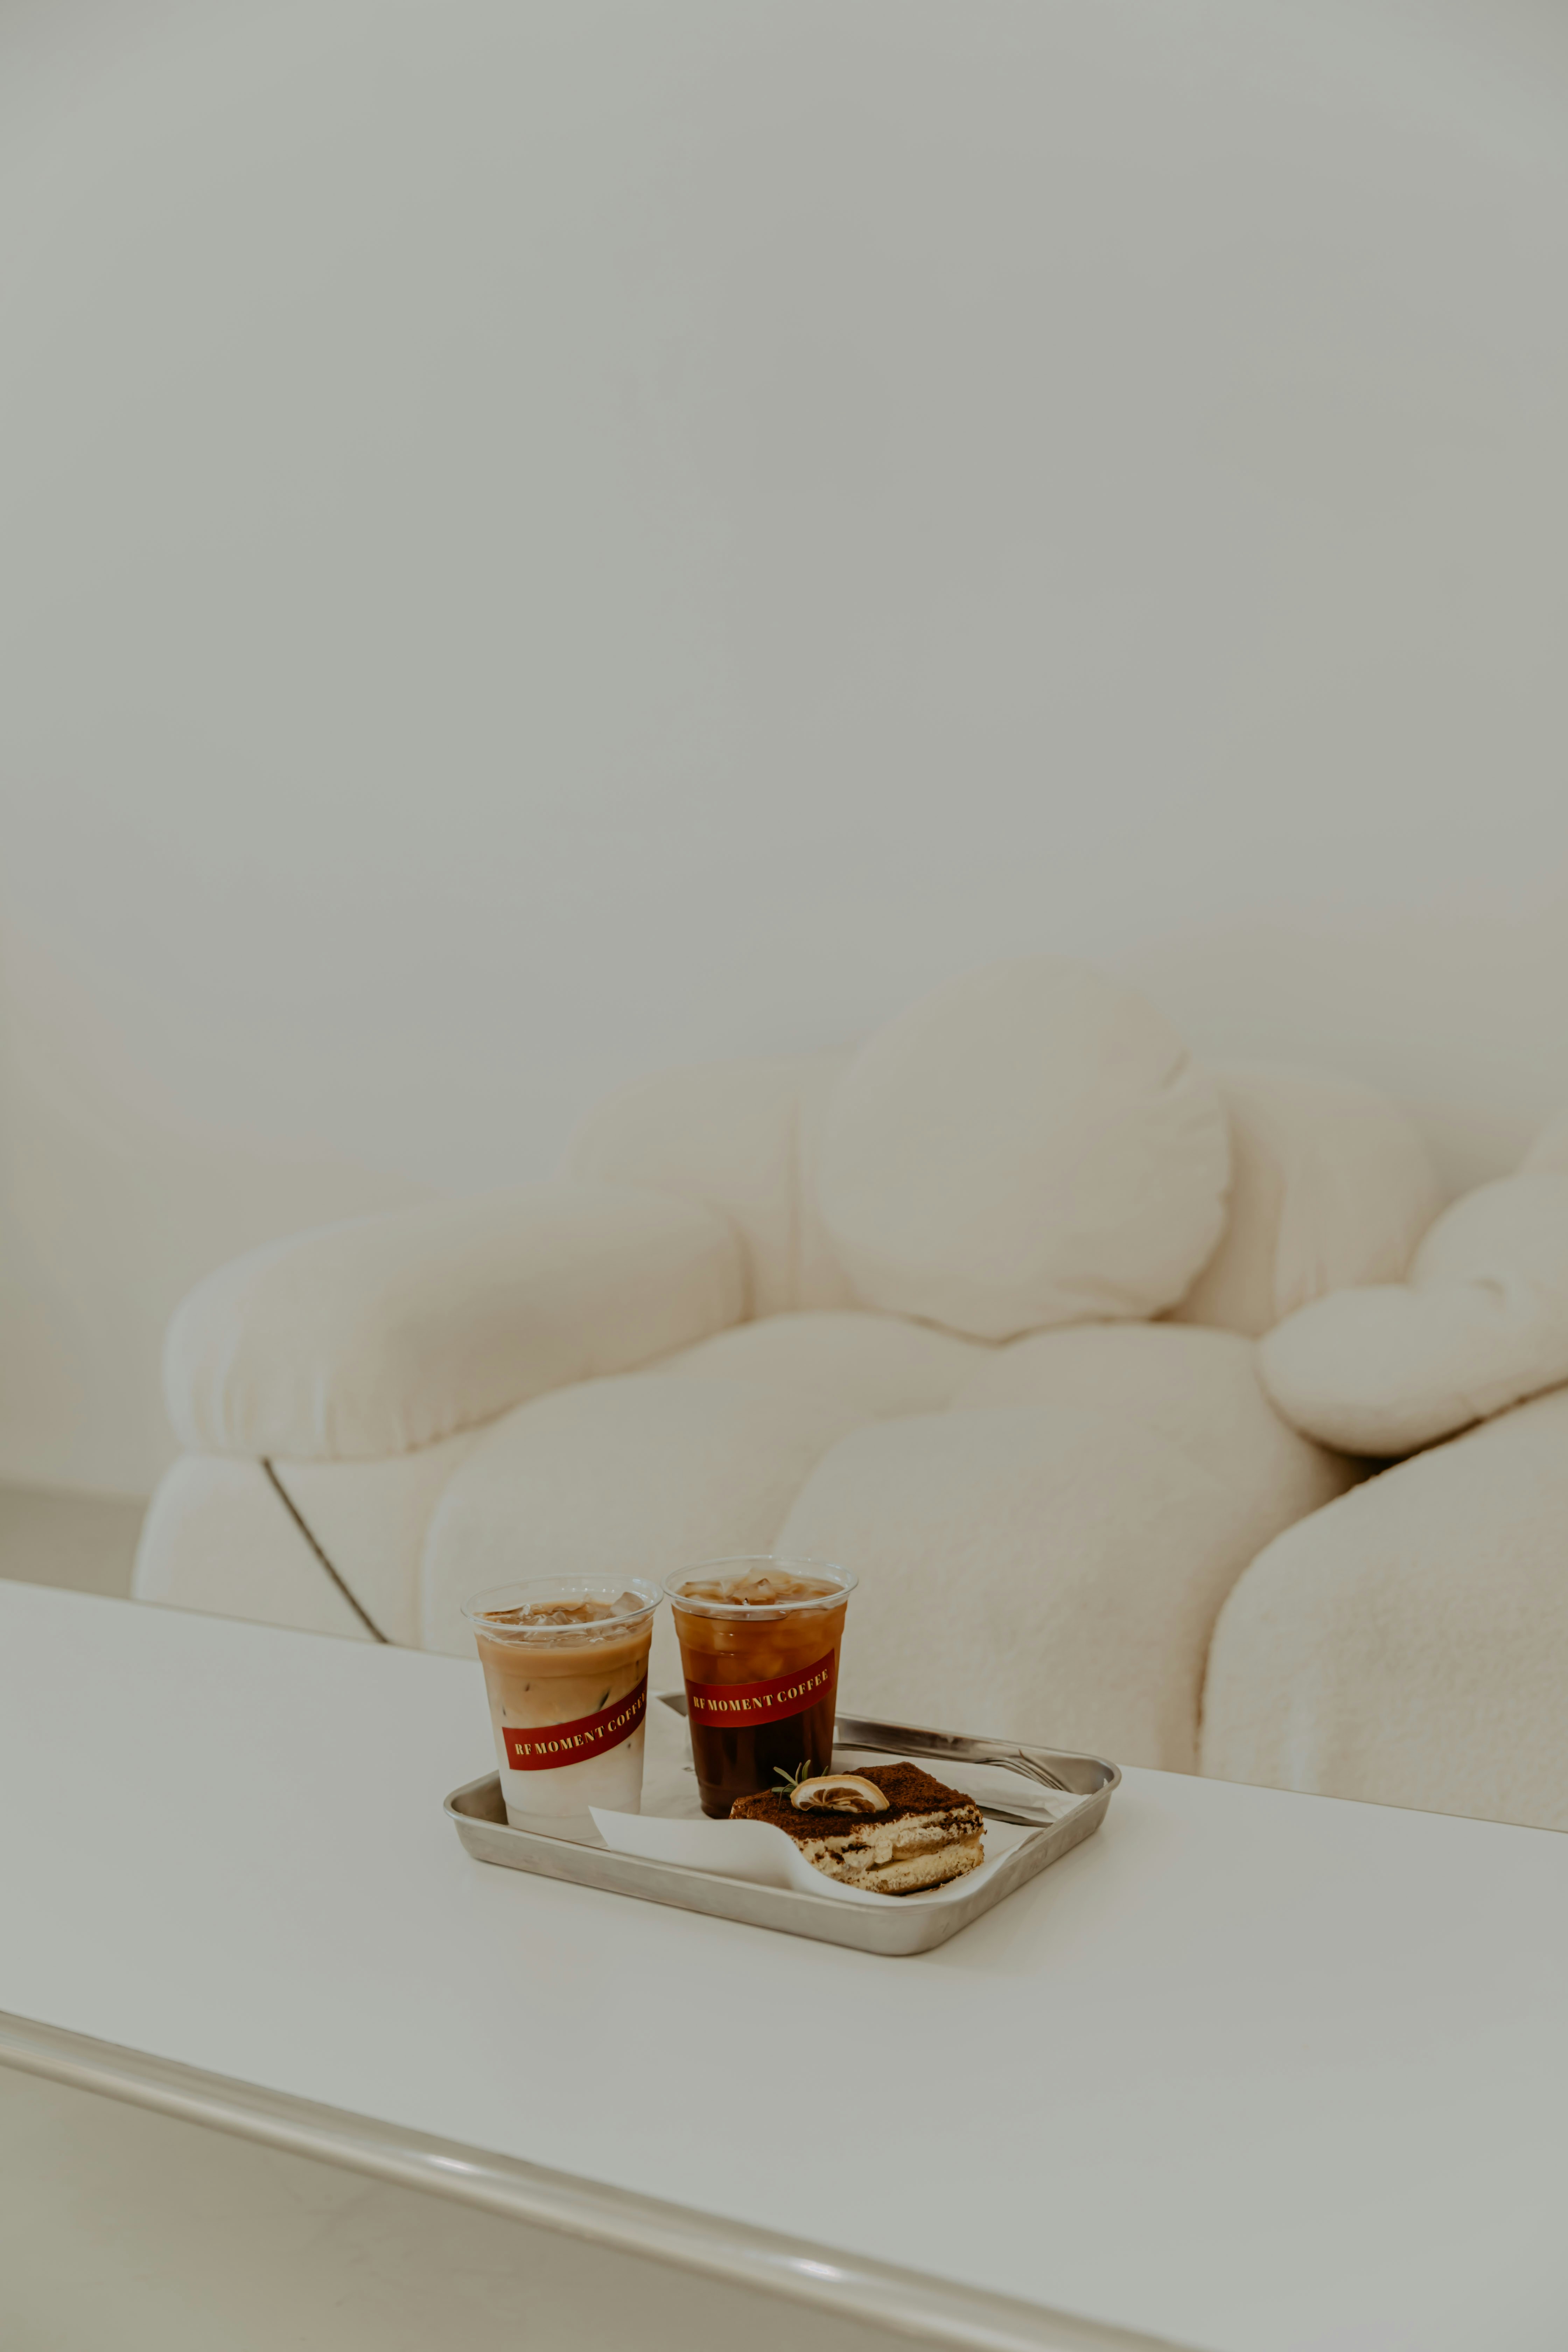 white sofa chair with coffee mug on table